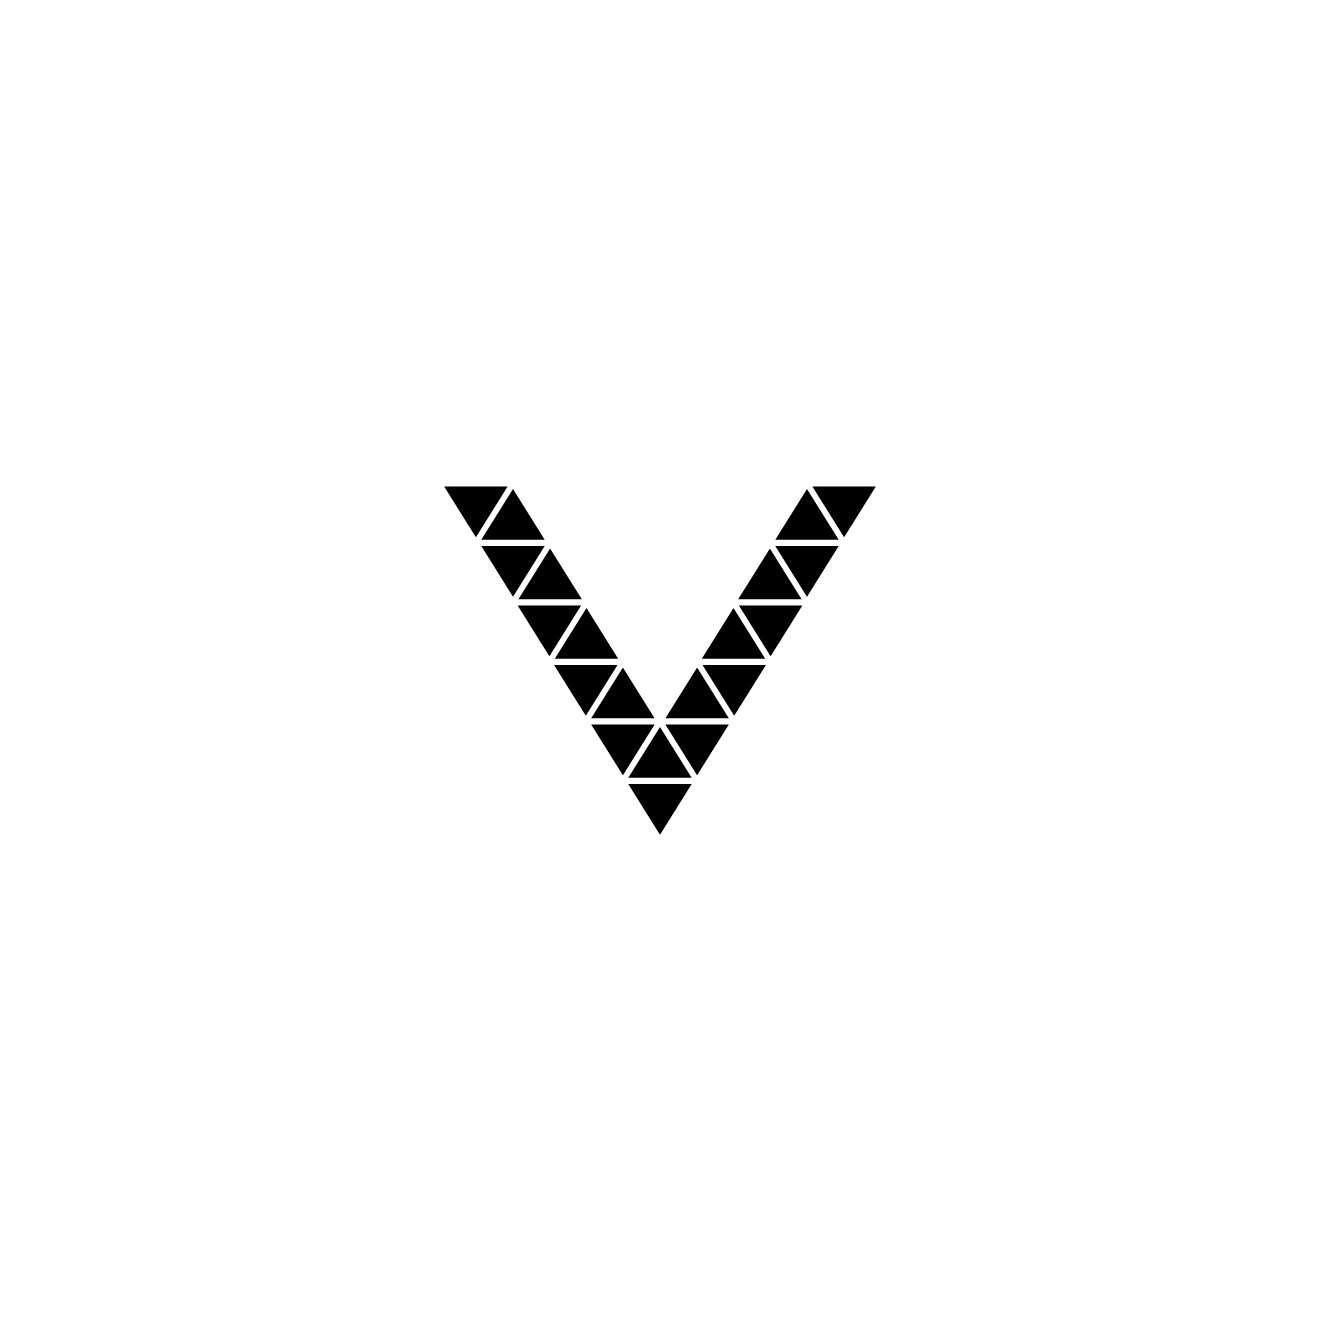 Black and White V Logo - All logos | Heury & Heury